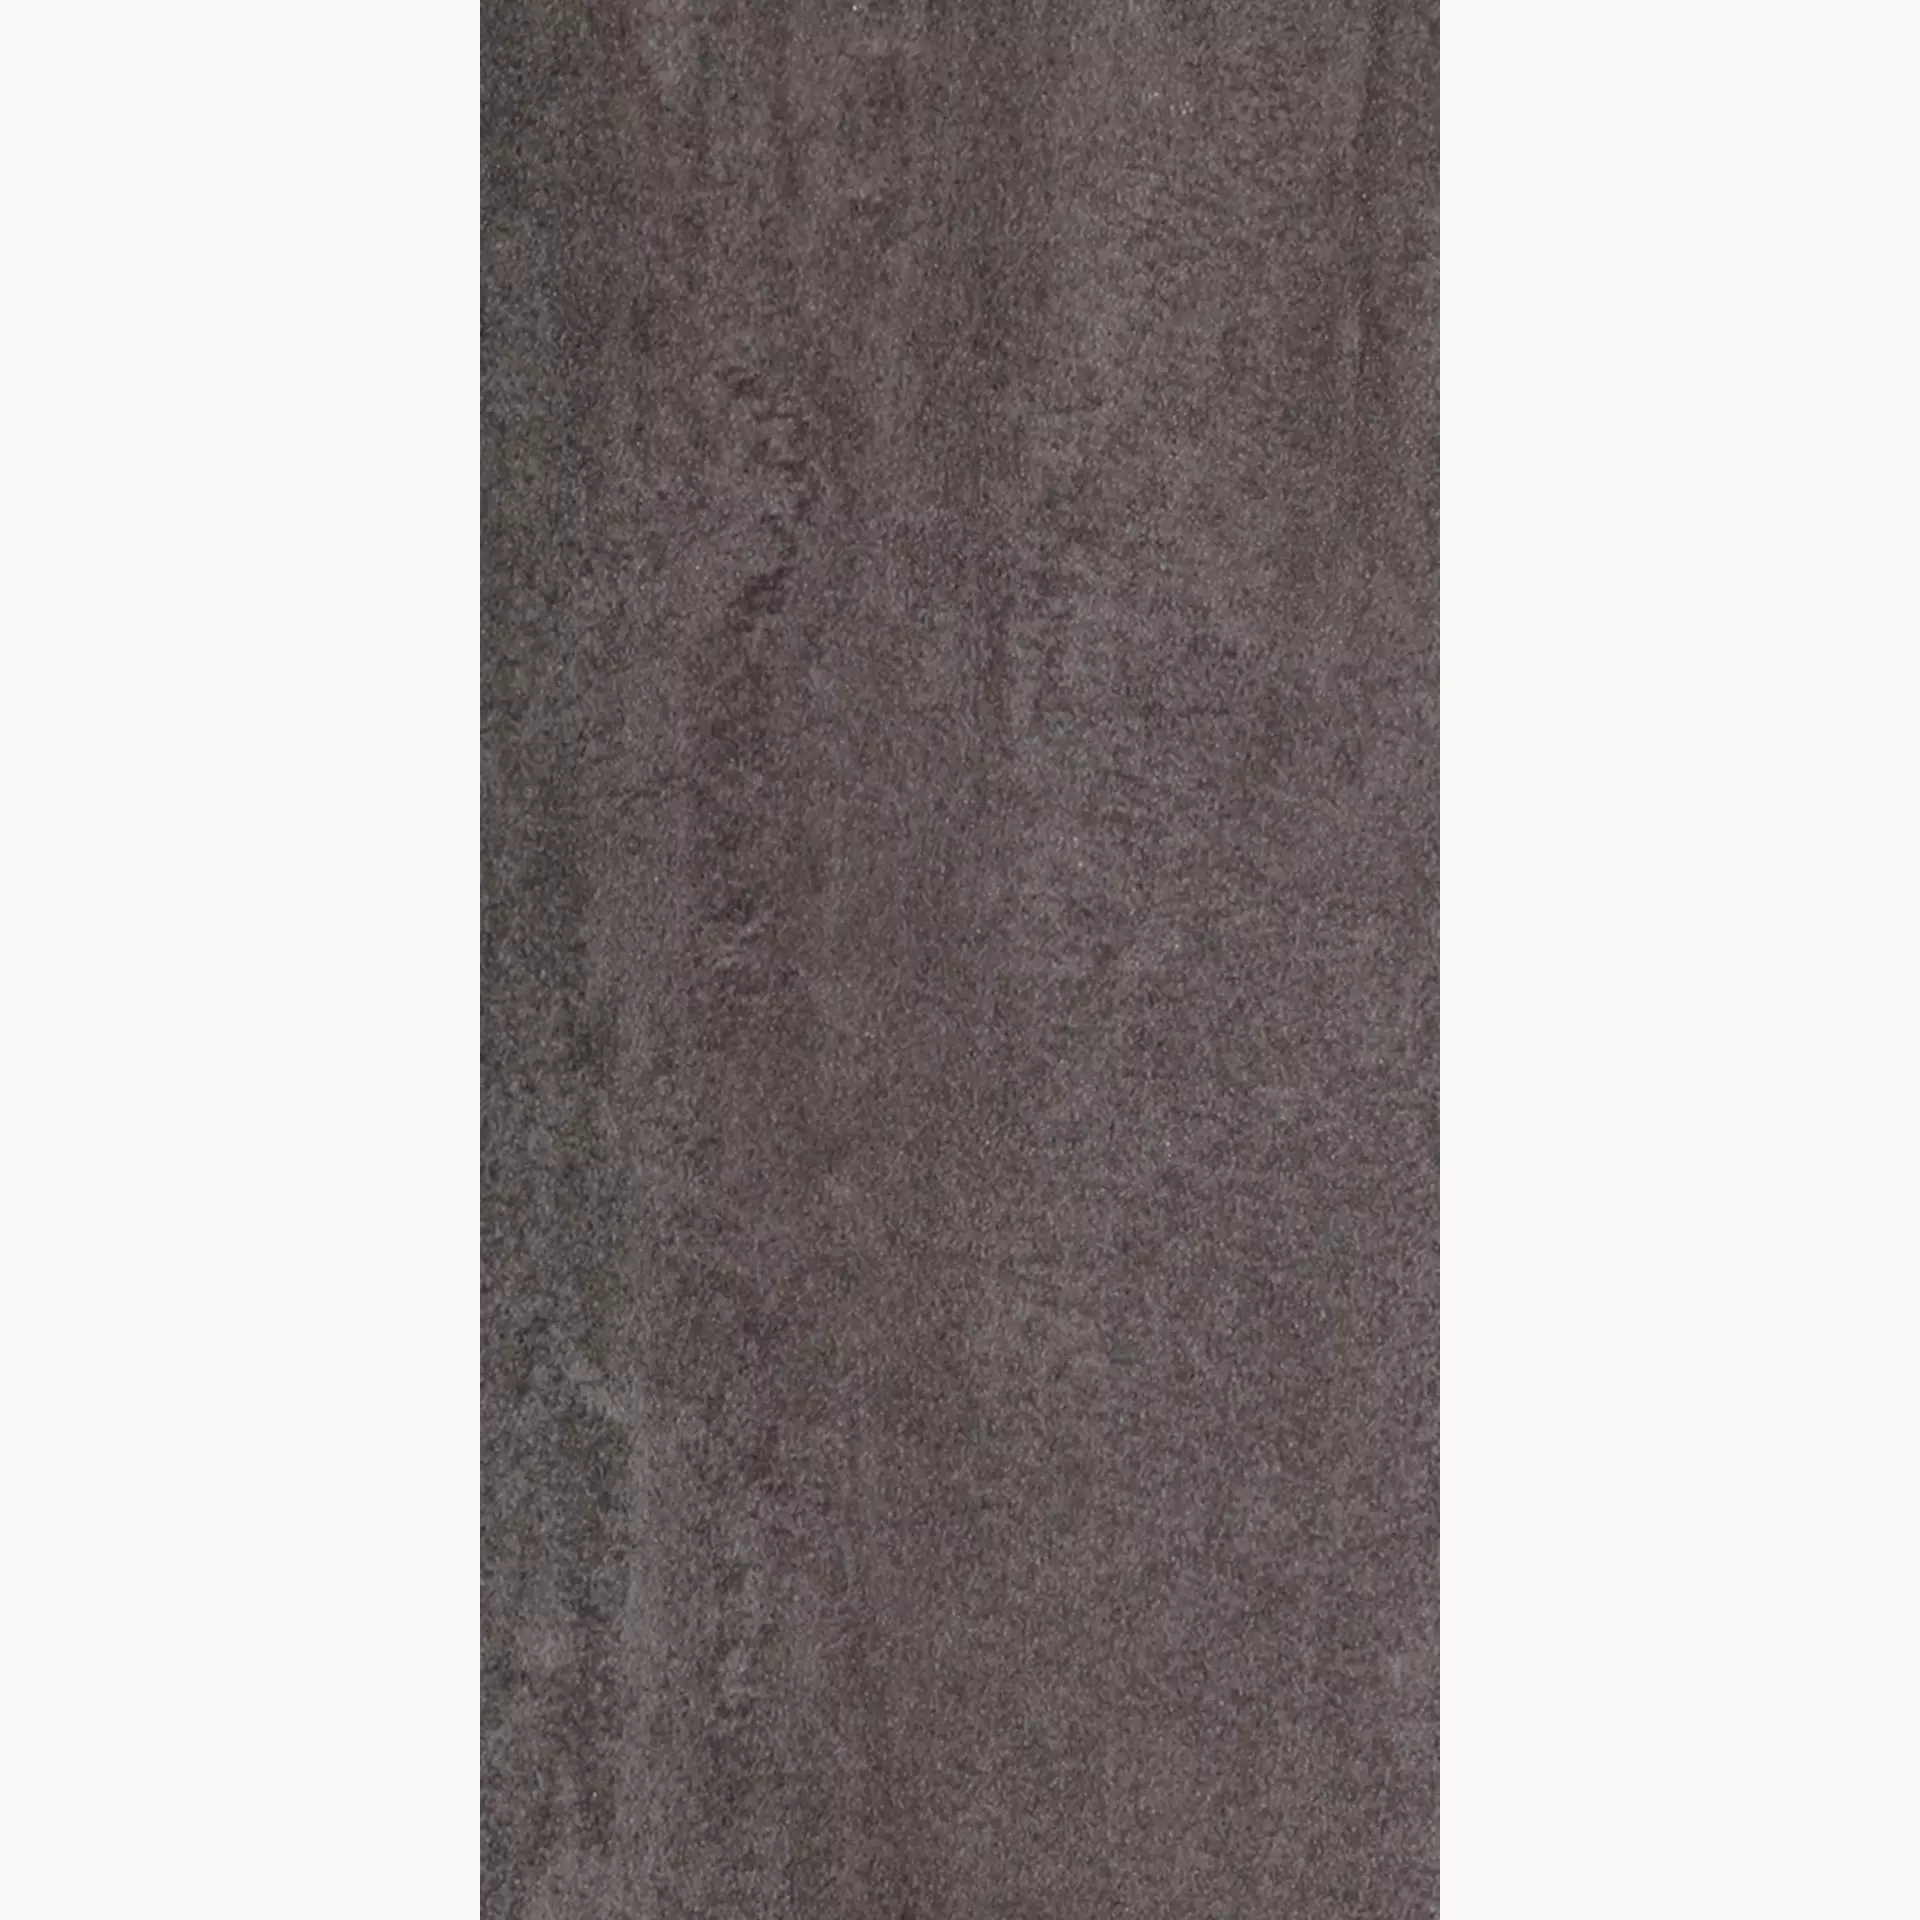 Rondine Contract Grey Naturale J83701 30,5x60,5cm 8,5mm